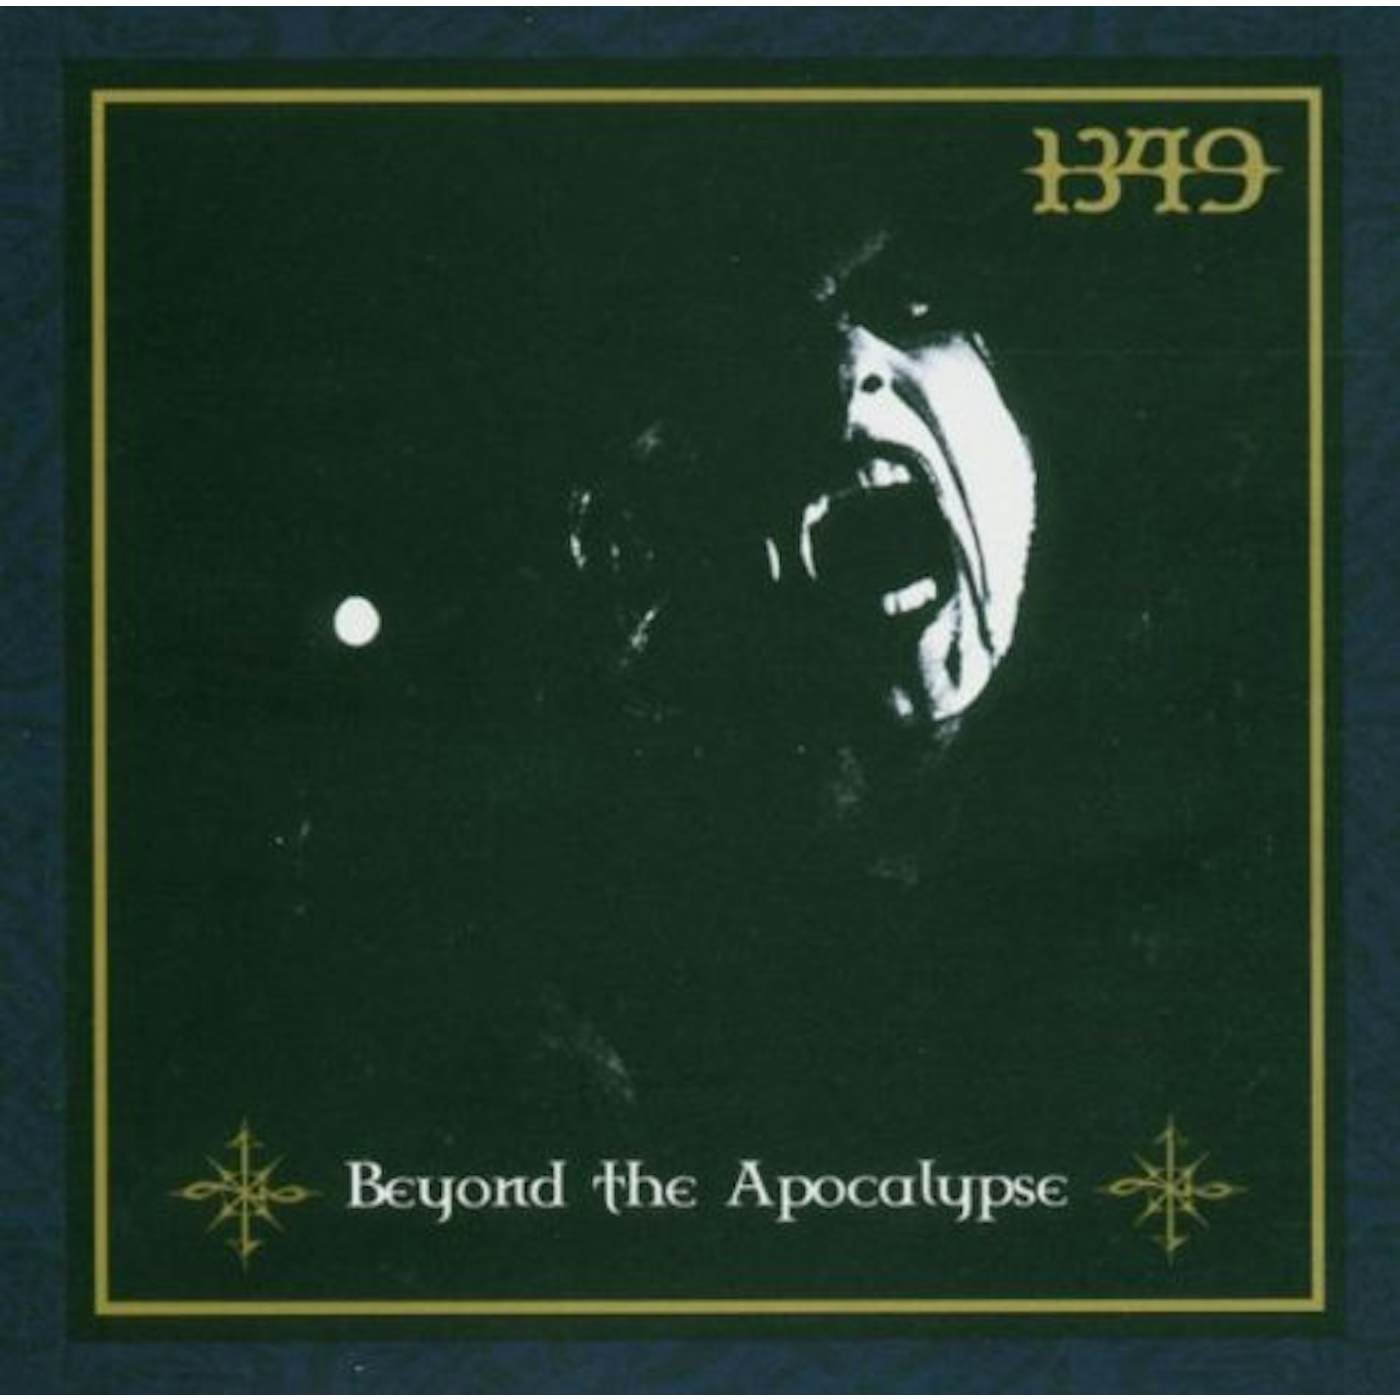 1349 BEYOND THE APOCALYSE (UK) (Vinyl)